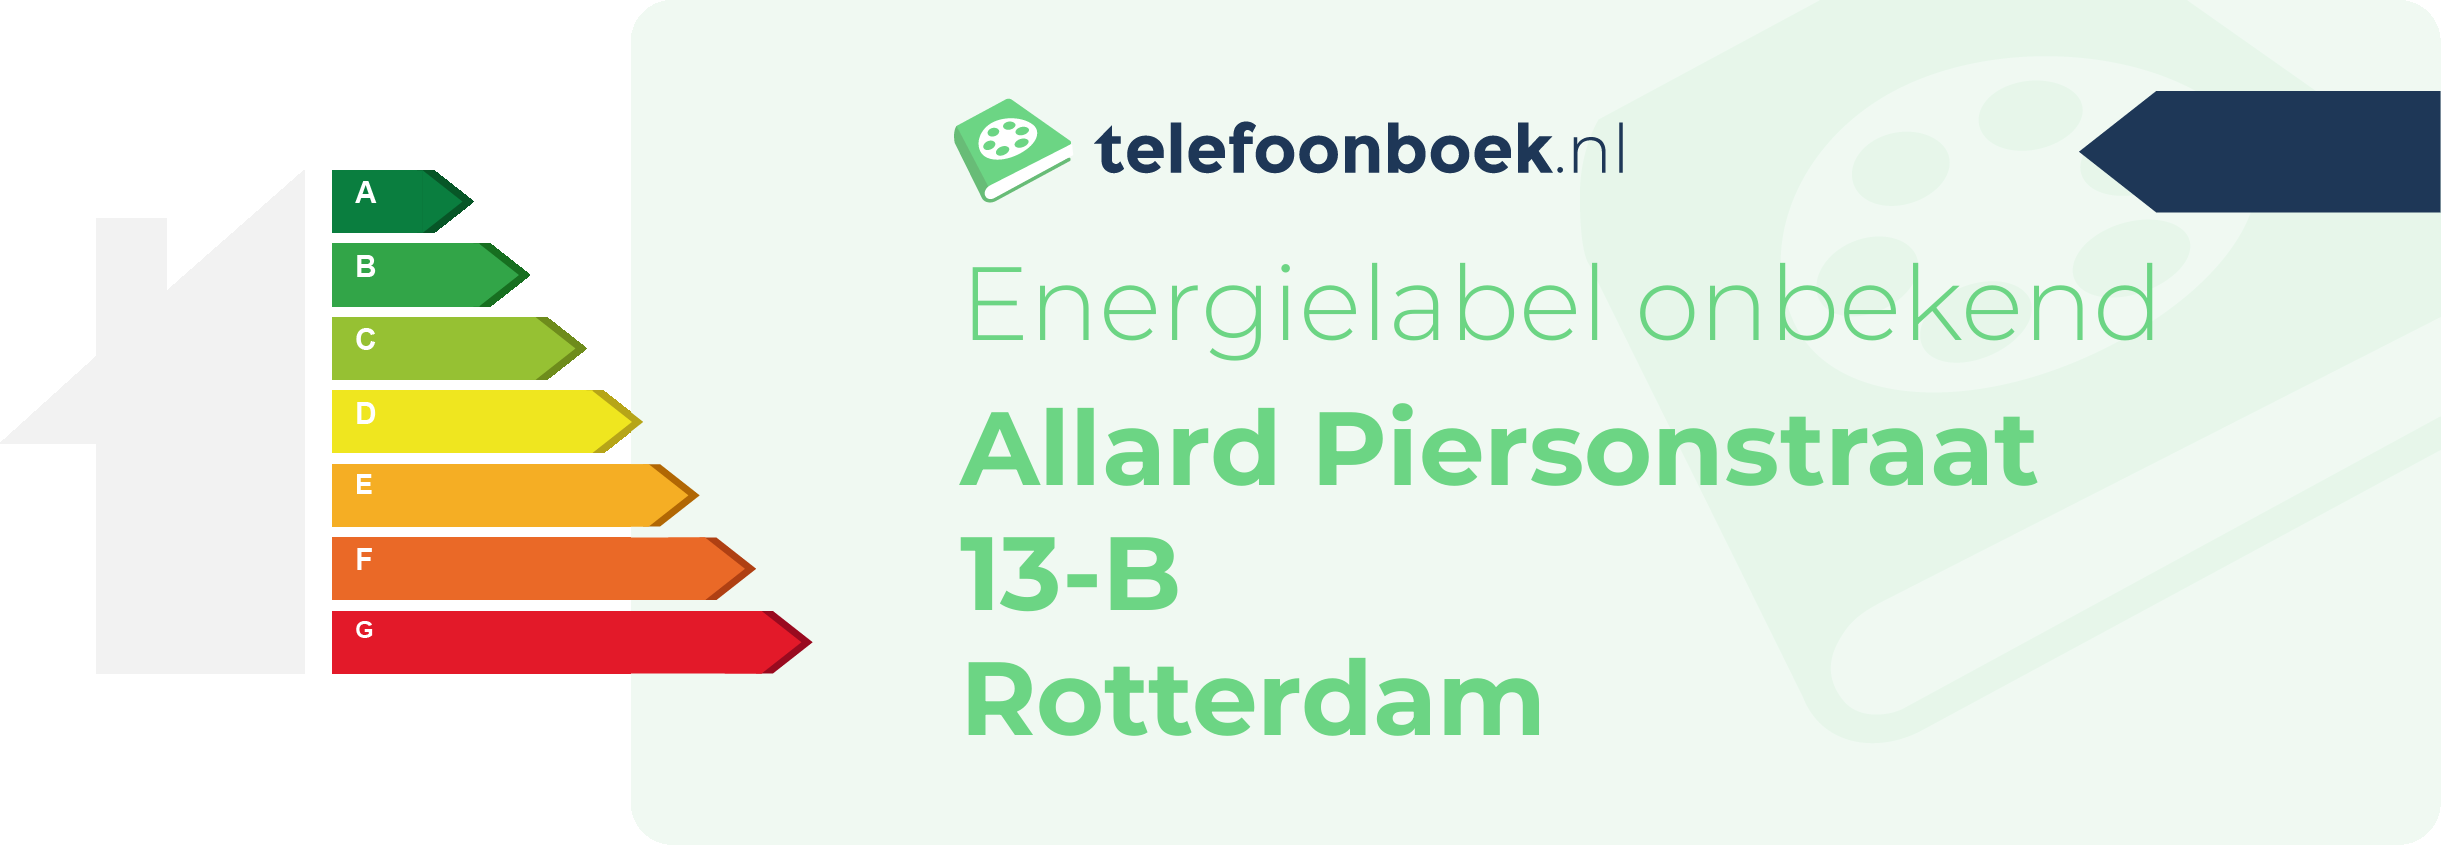 Energielabel Allard Piersonstraat 13-B Rotterdam